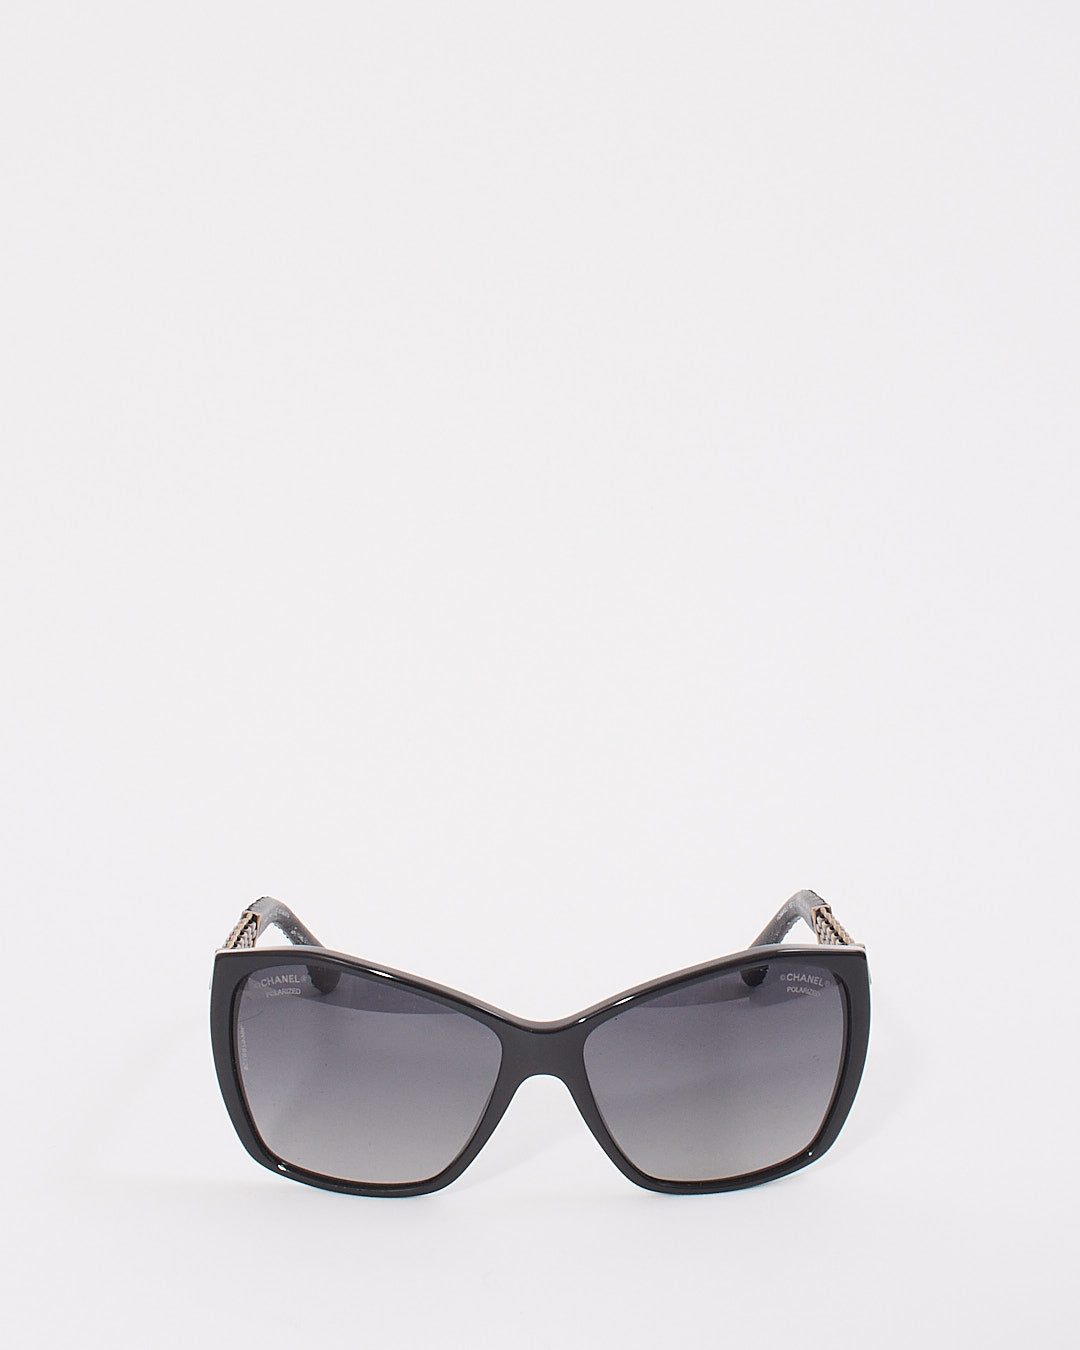 Chanel Black 5327-Q Cat Eye Sunglasses